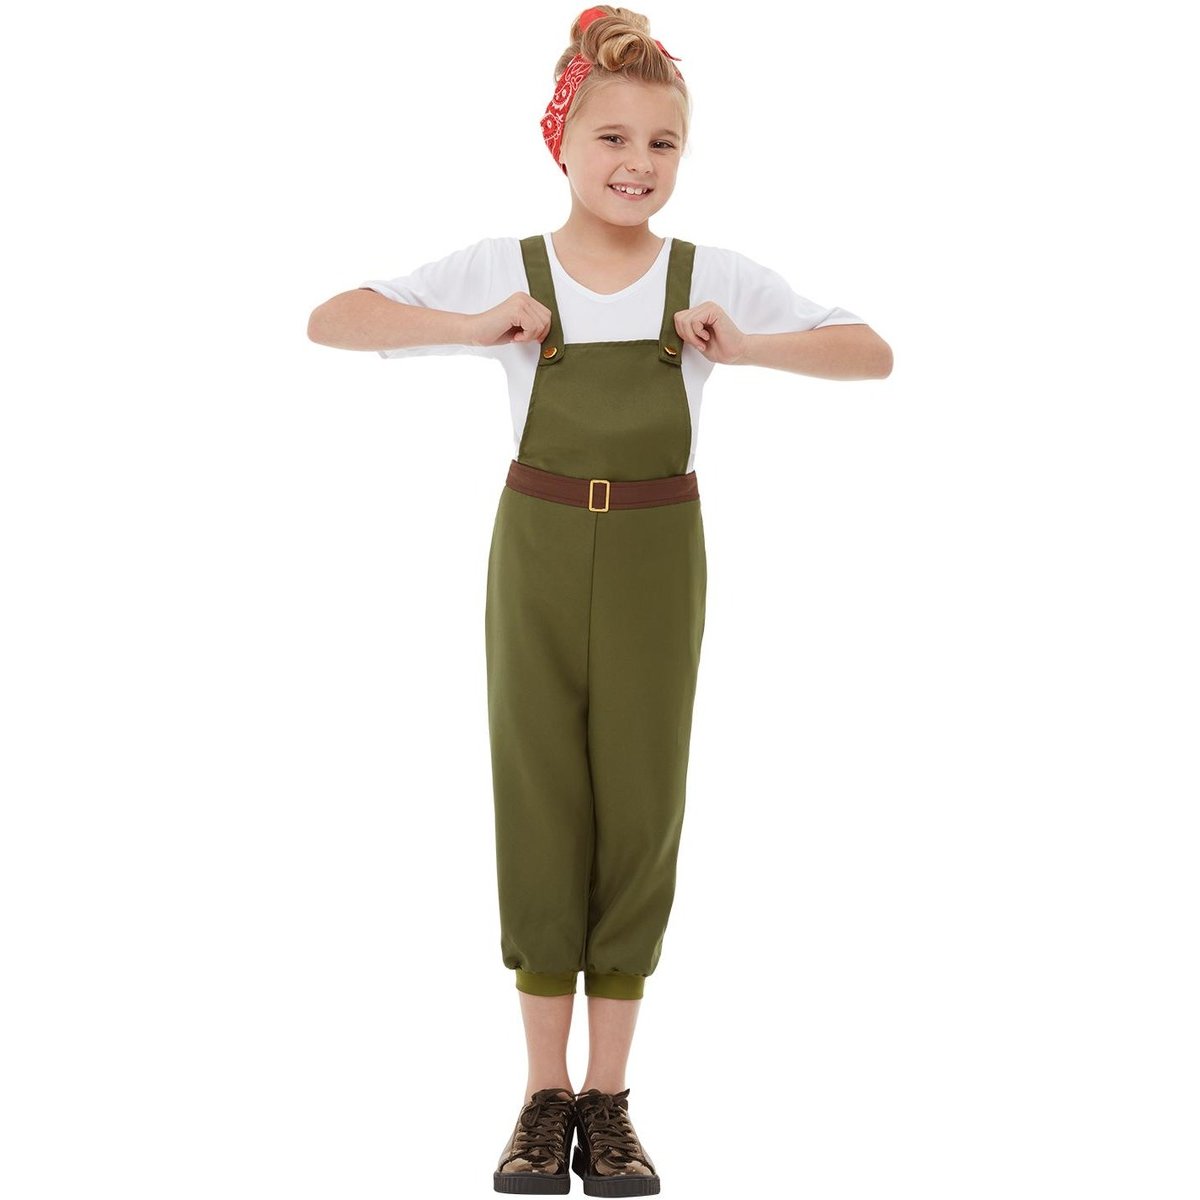 Children's Girls 1940s World War 2 Land Girl Fancy Dress Costume Book Day Age 7 - 9